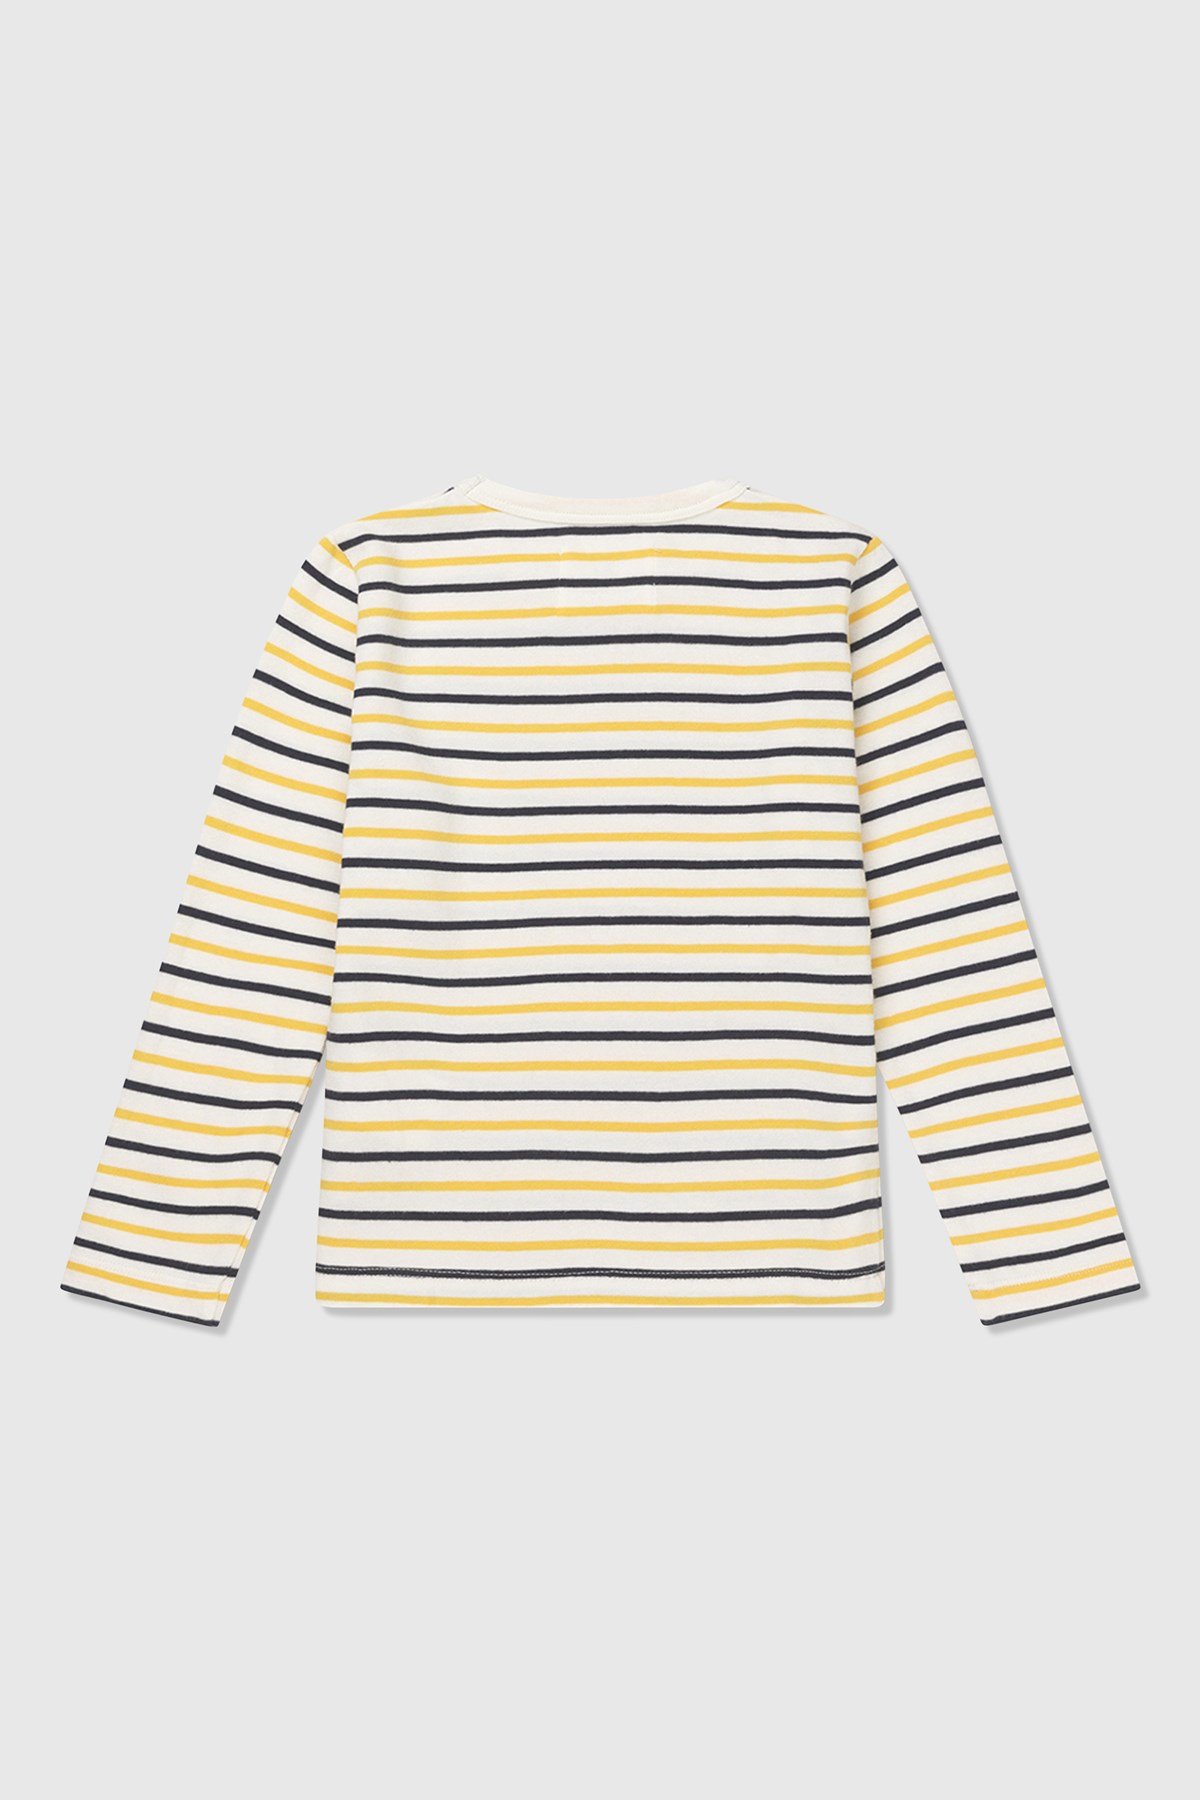 Double A by Wood Wood Kim stripe kids LS T-shirt Off-white/yellow stripes